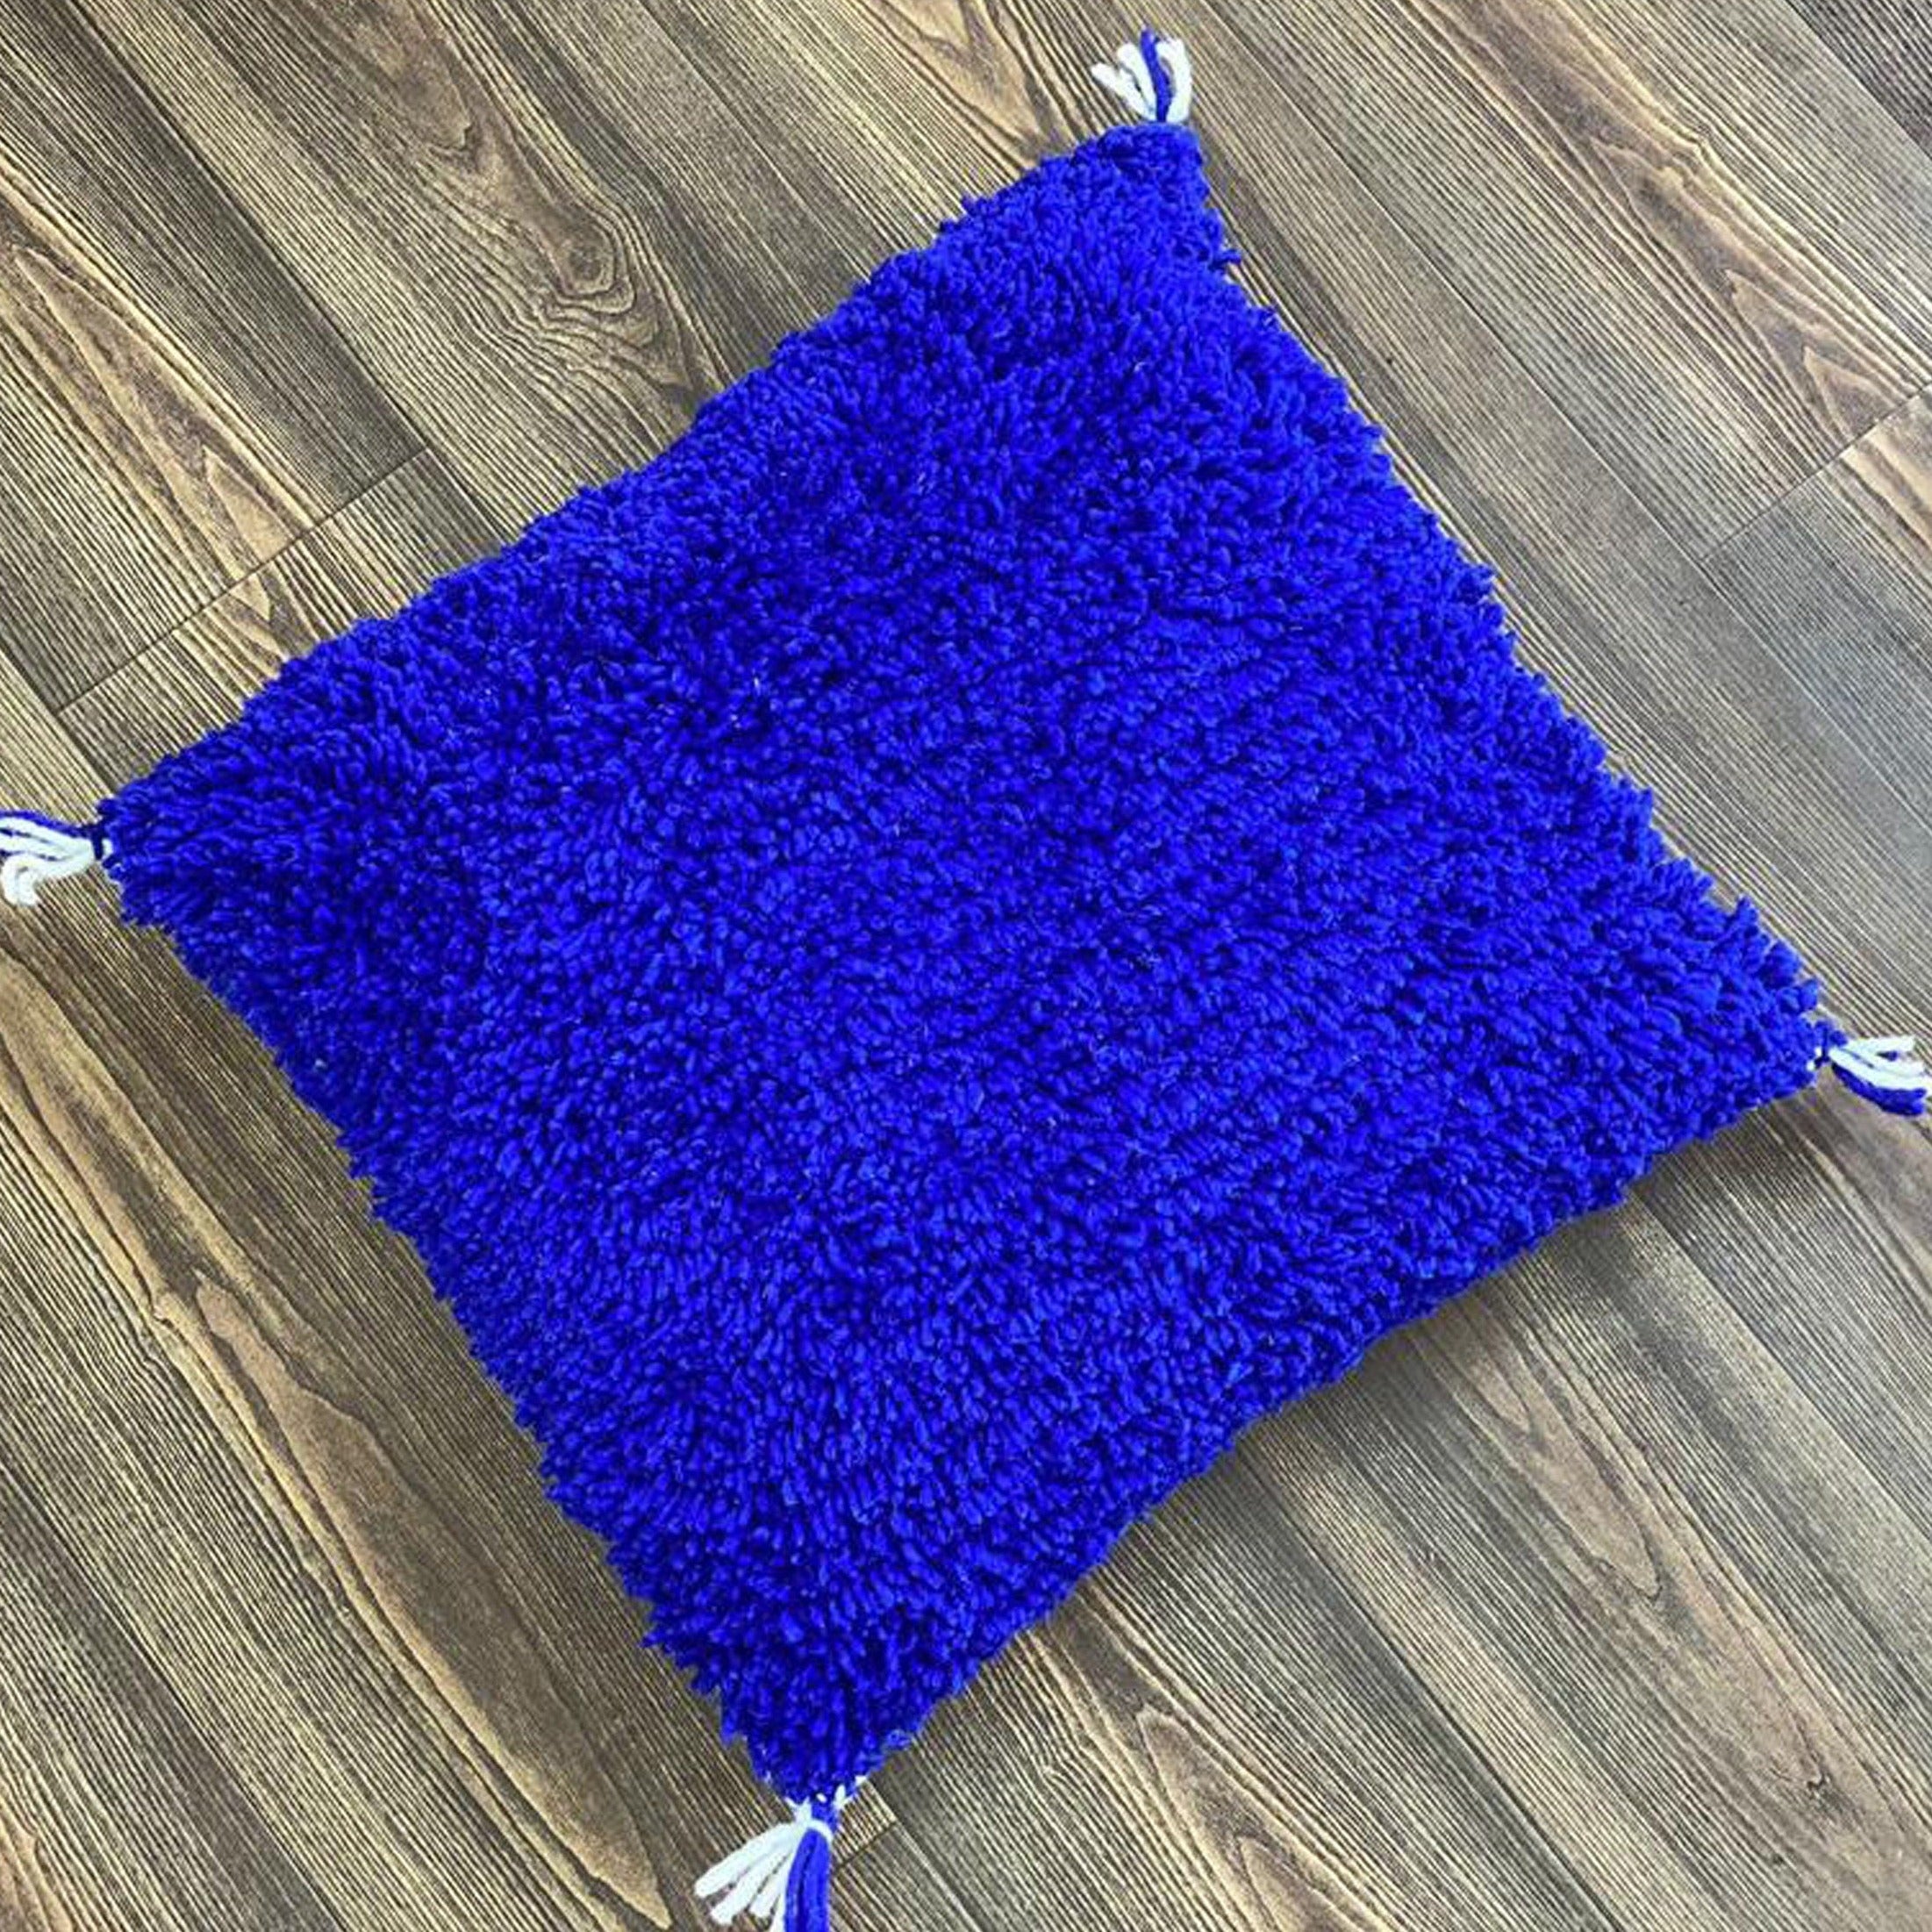 Berber Blue Wool Pillow & Cushion